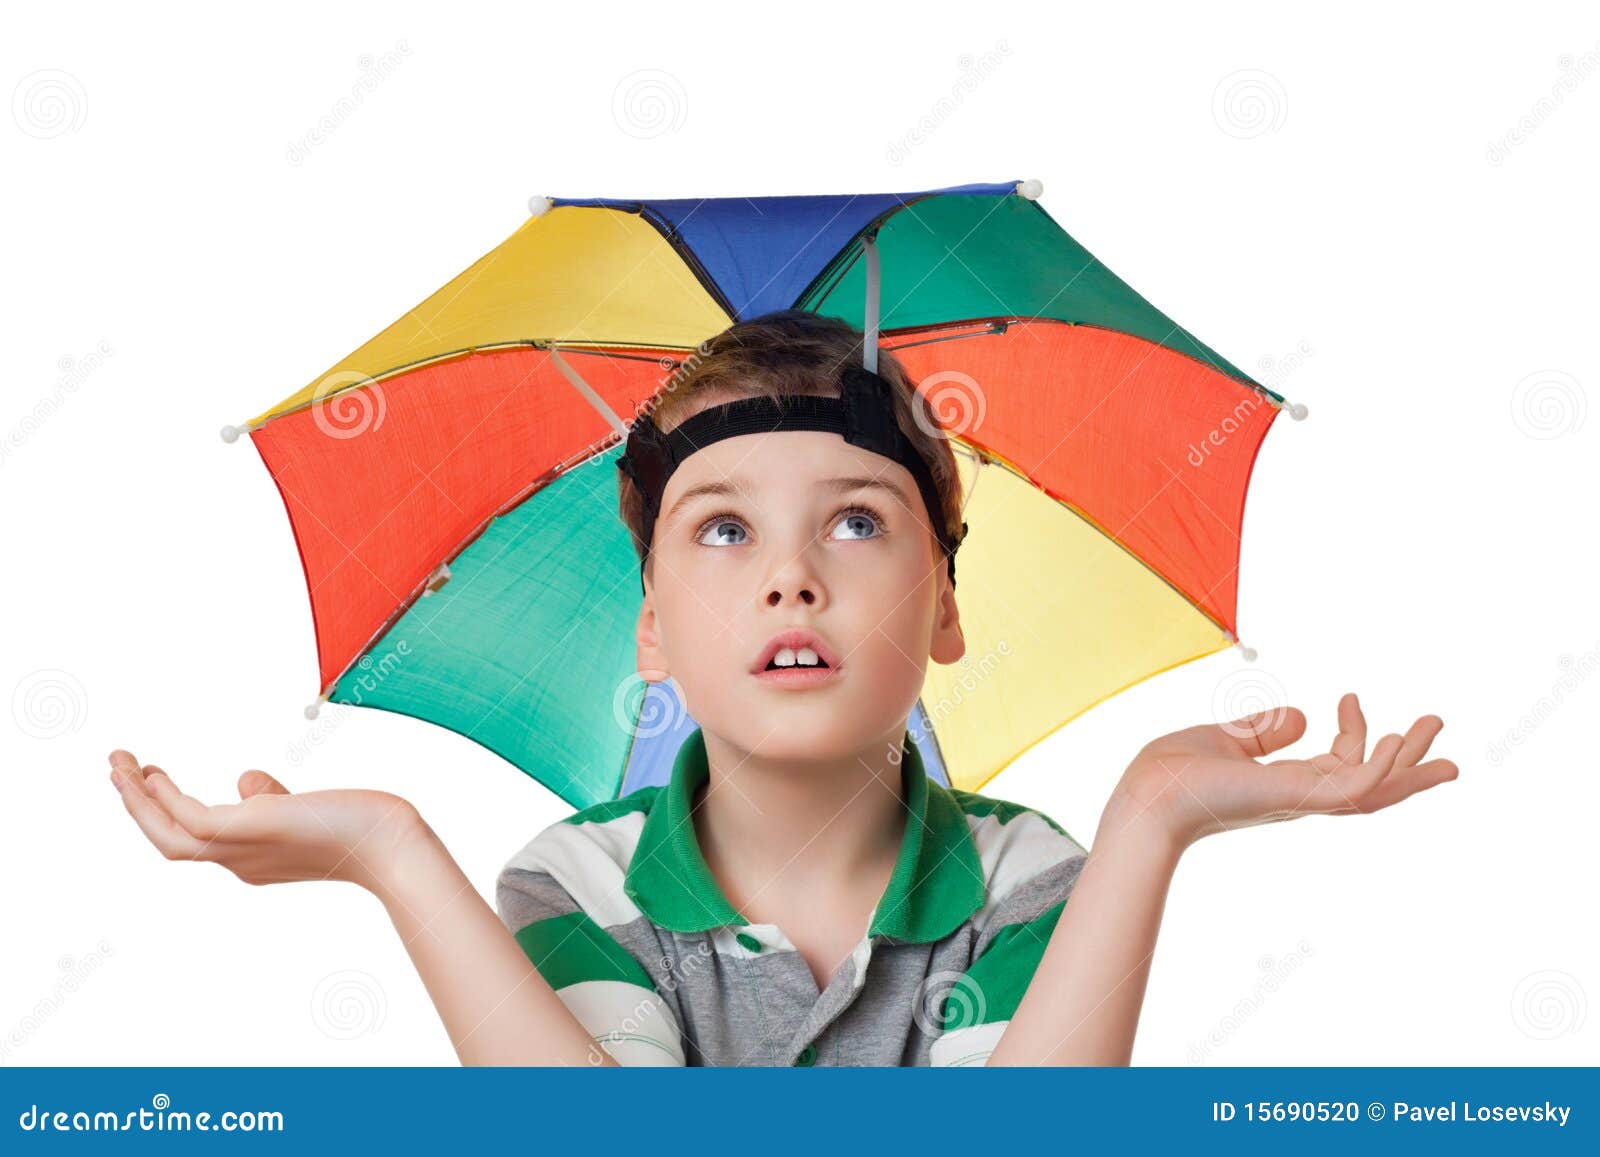 boy with umbrella on head spread hands aside